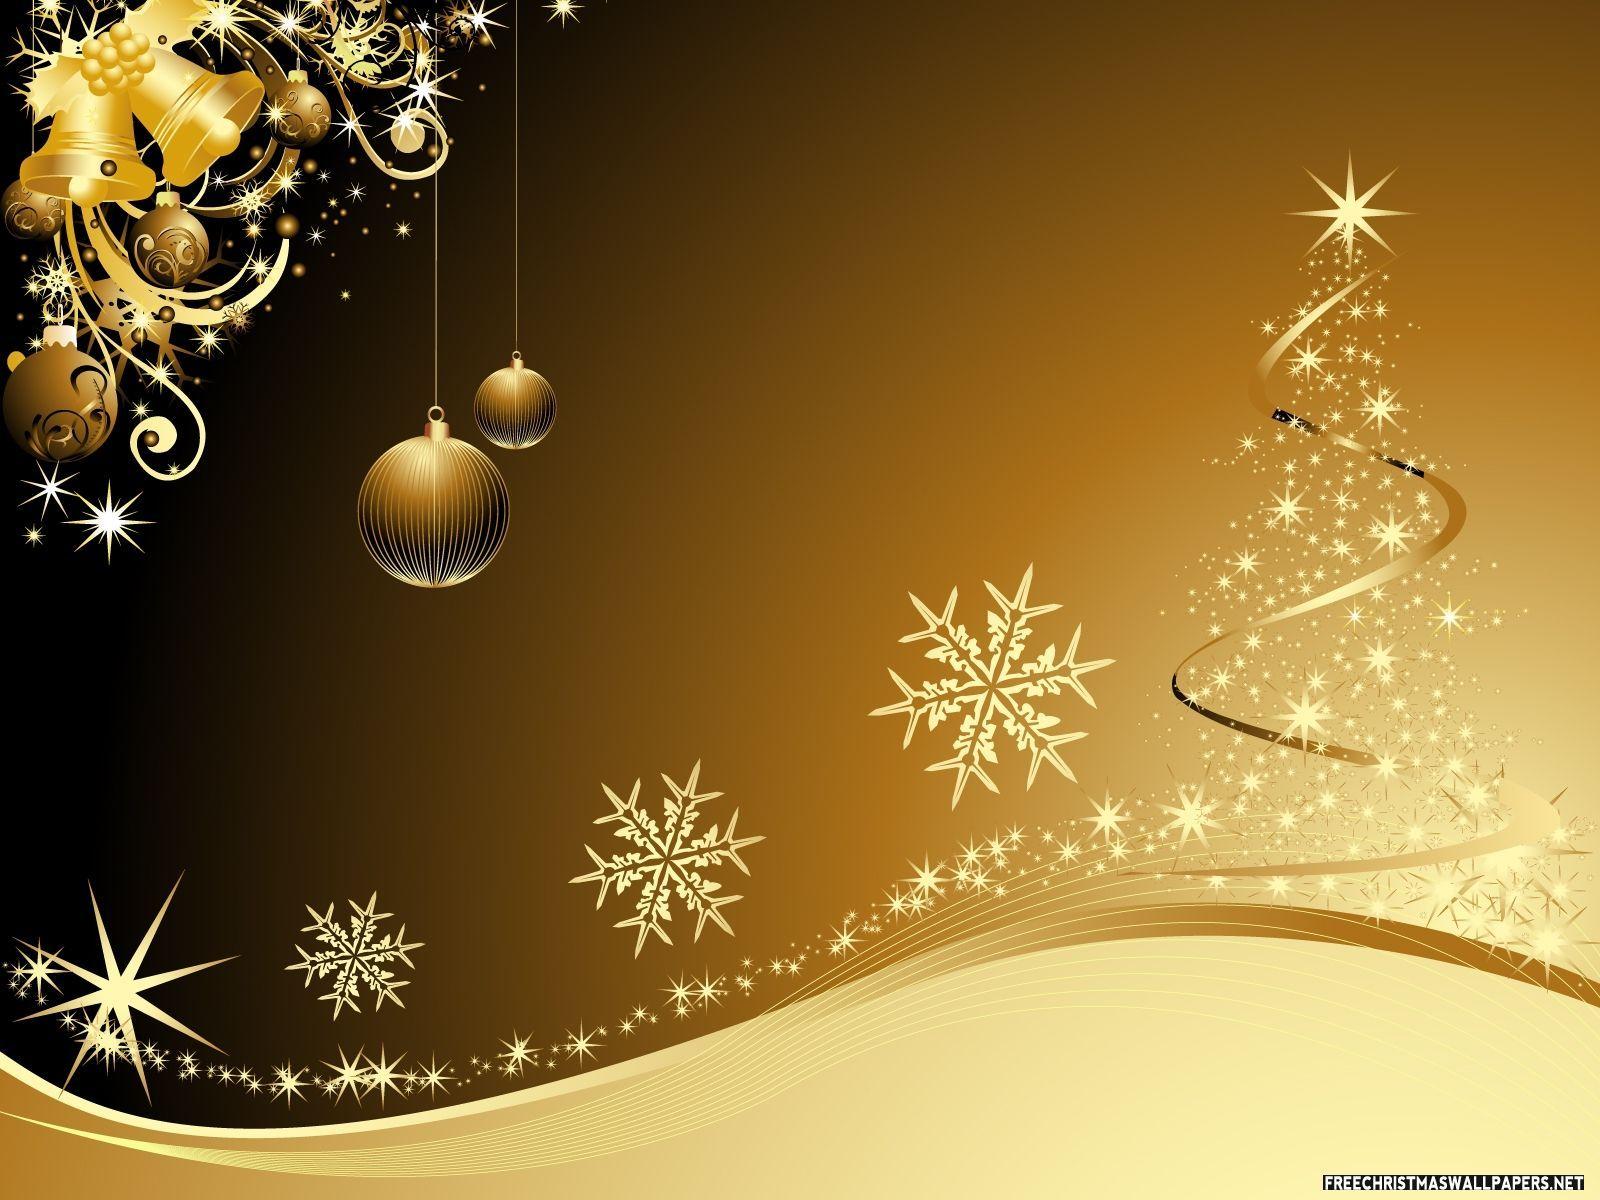 Golden Christmas. Christmas desktop, Christmas wallpaper, Christmas wallpaper free